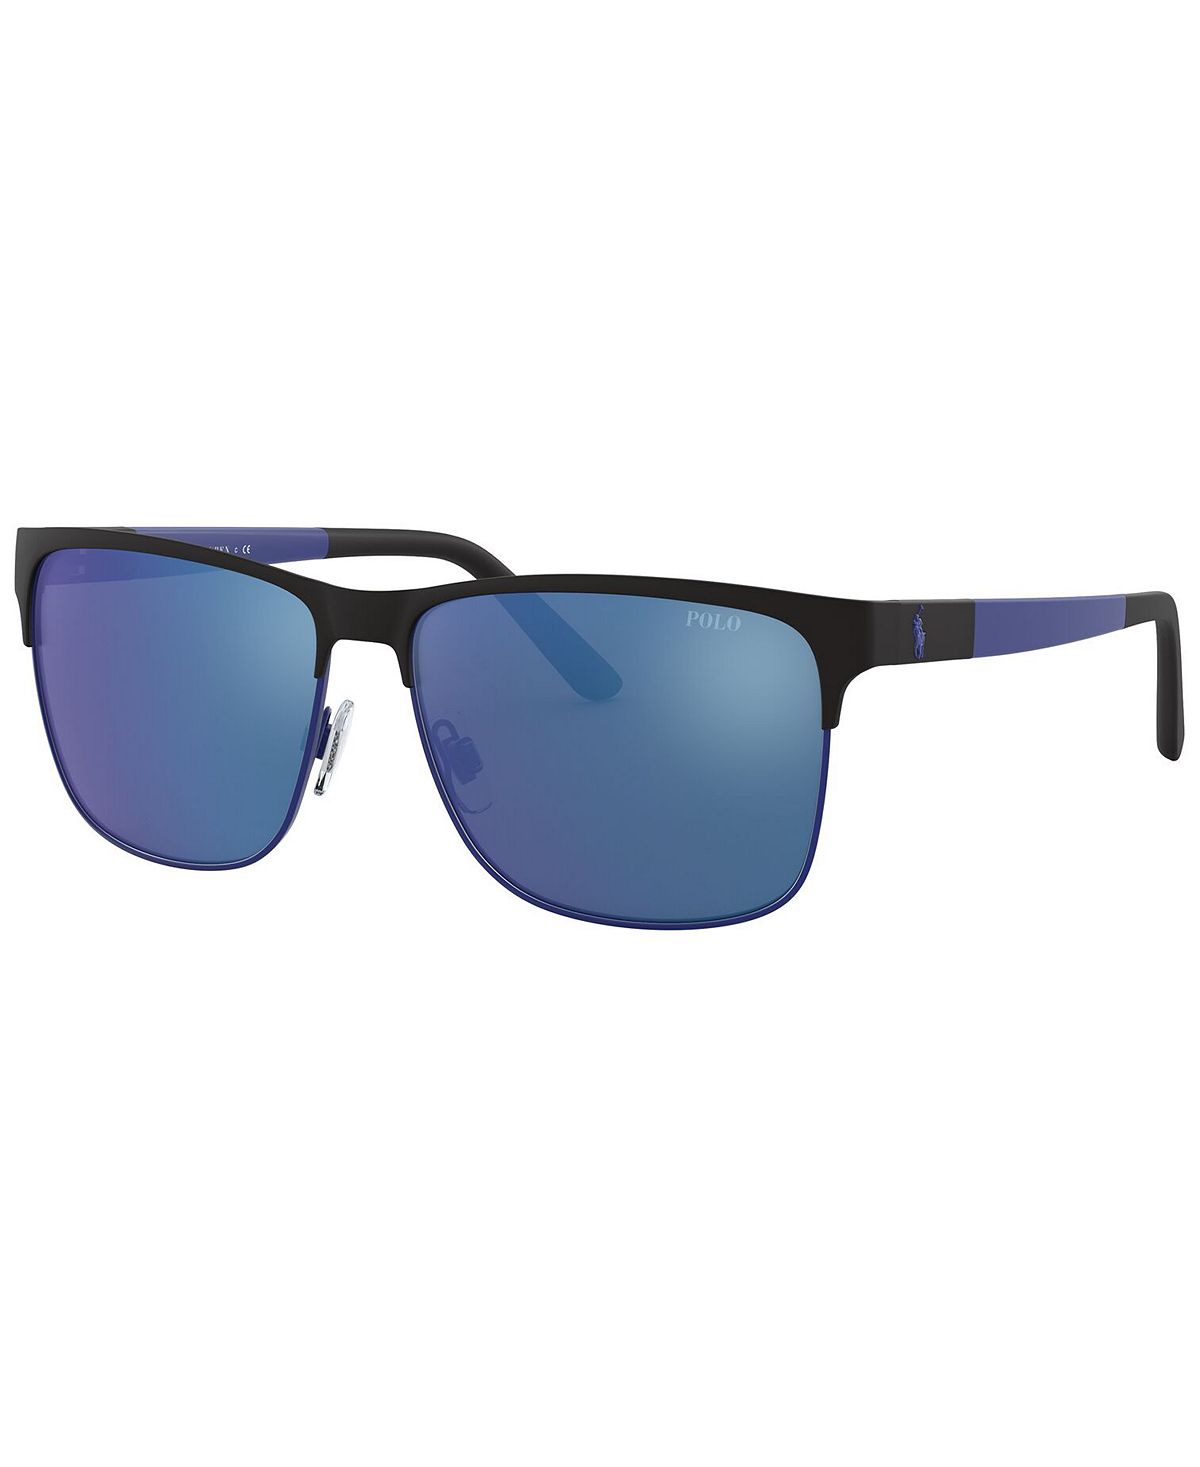 Солнцезащитные очки, PH3128 57 Polo Ralph Lauren pfi 1100mbk matte black 160 мл 0849c001